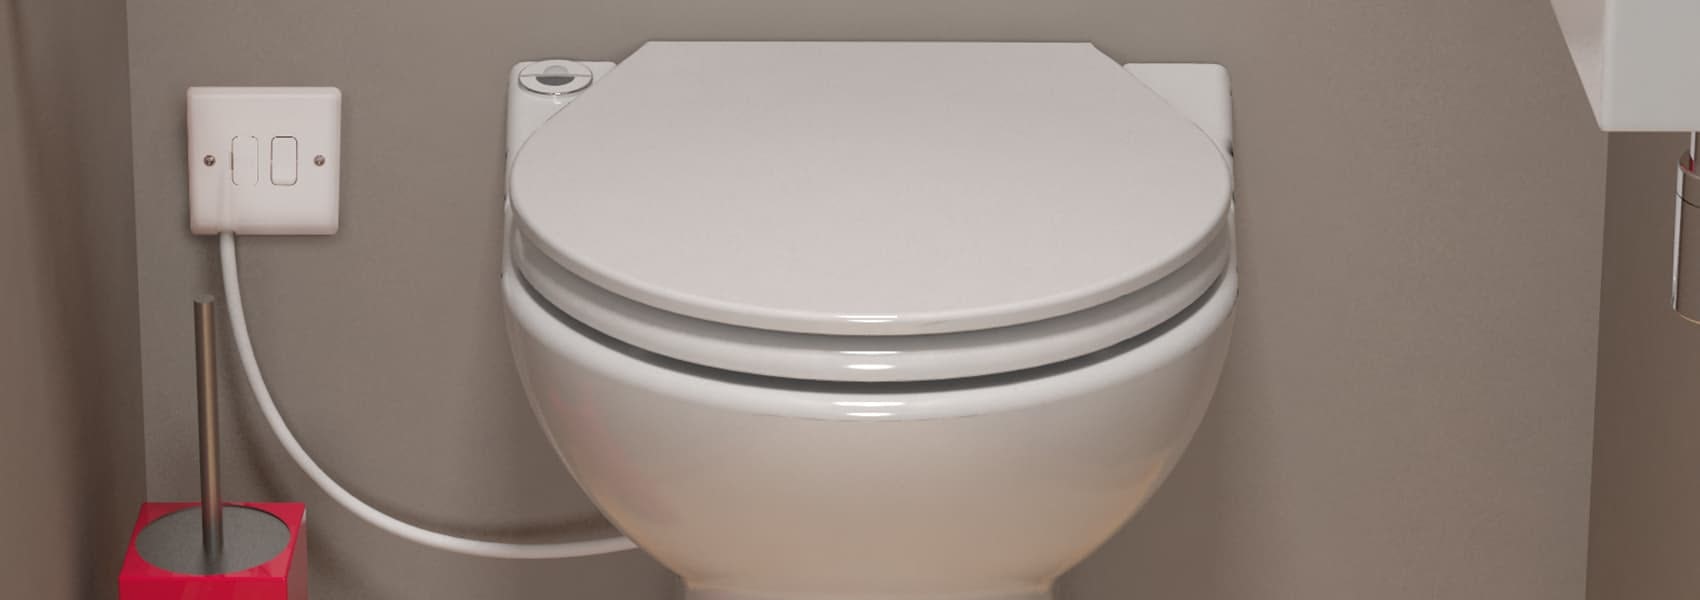 Saniflo Toilet Macerator System Maintenance Guide